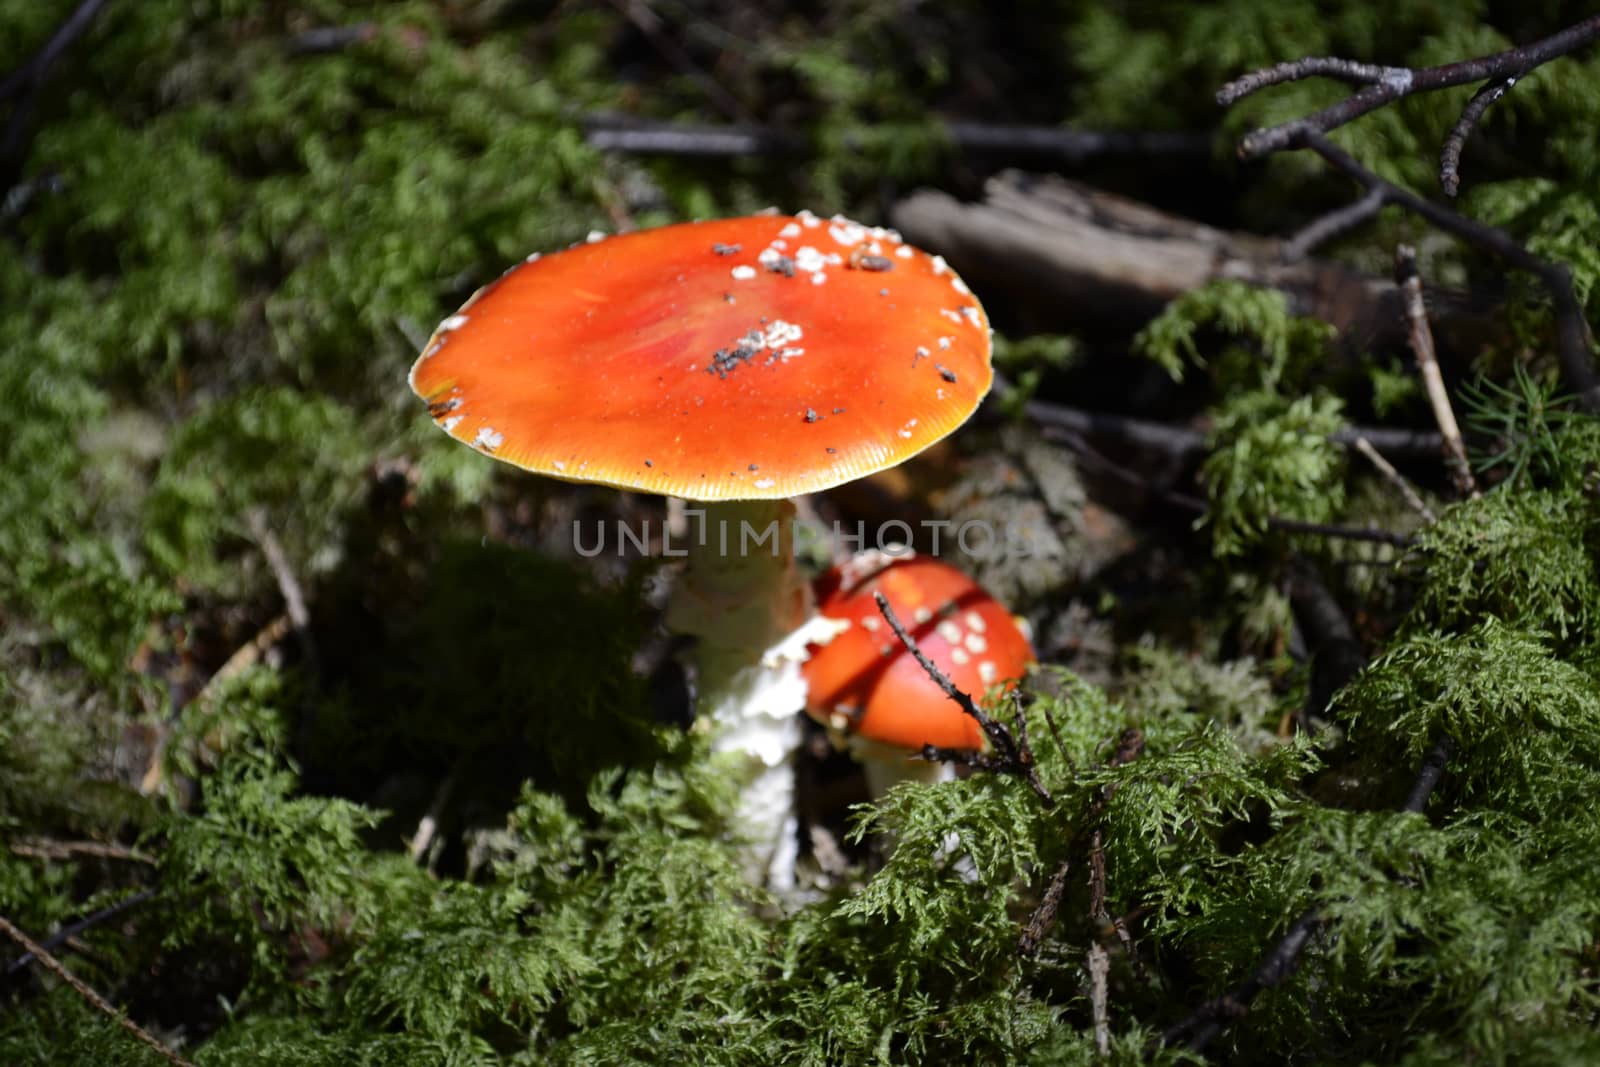 Amanita Muscaria mushrooms